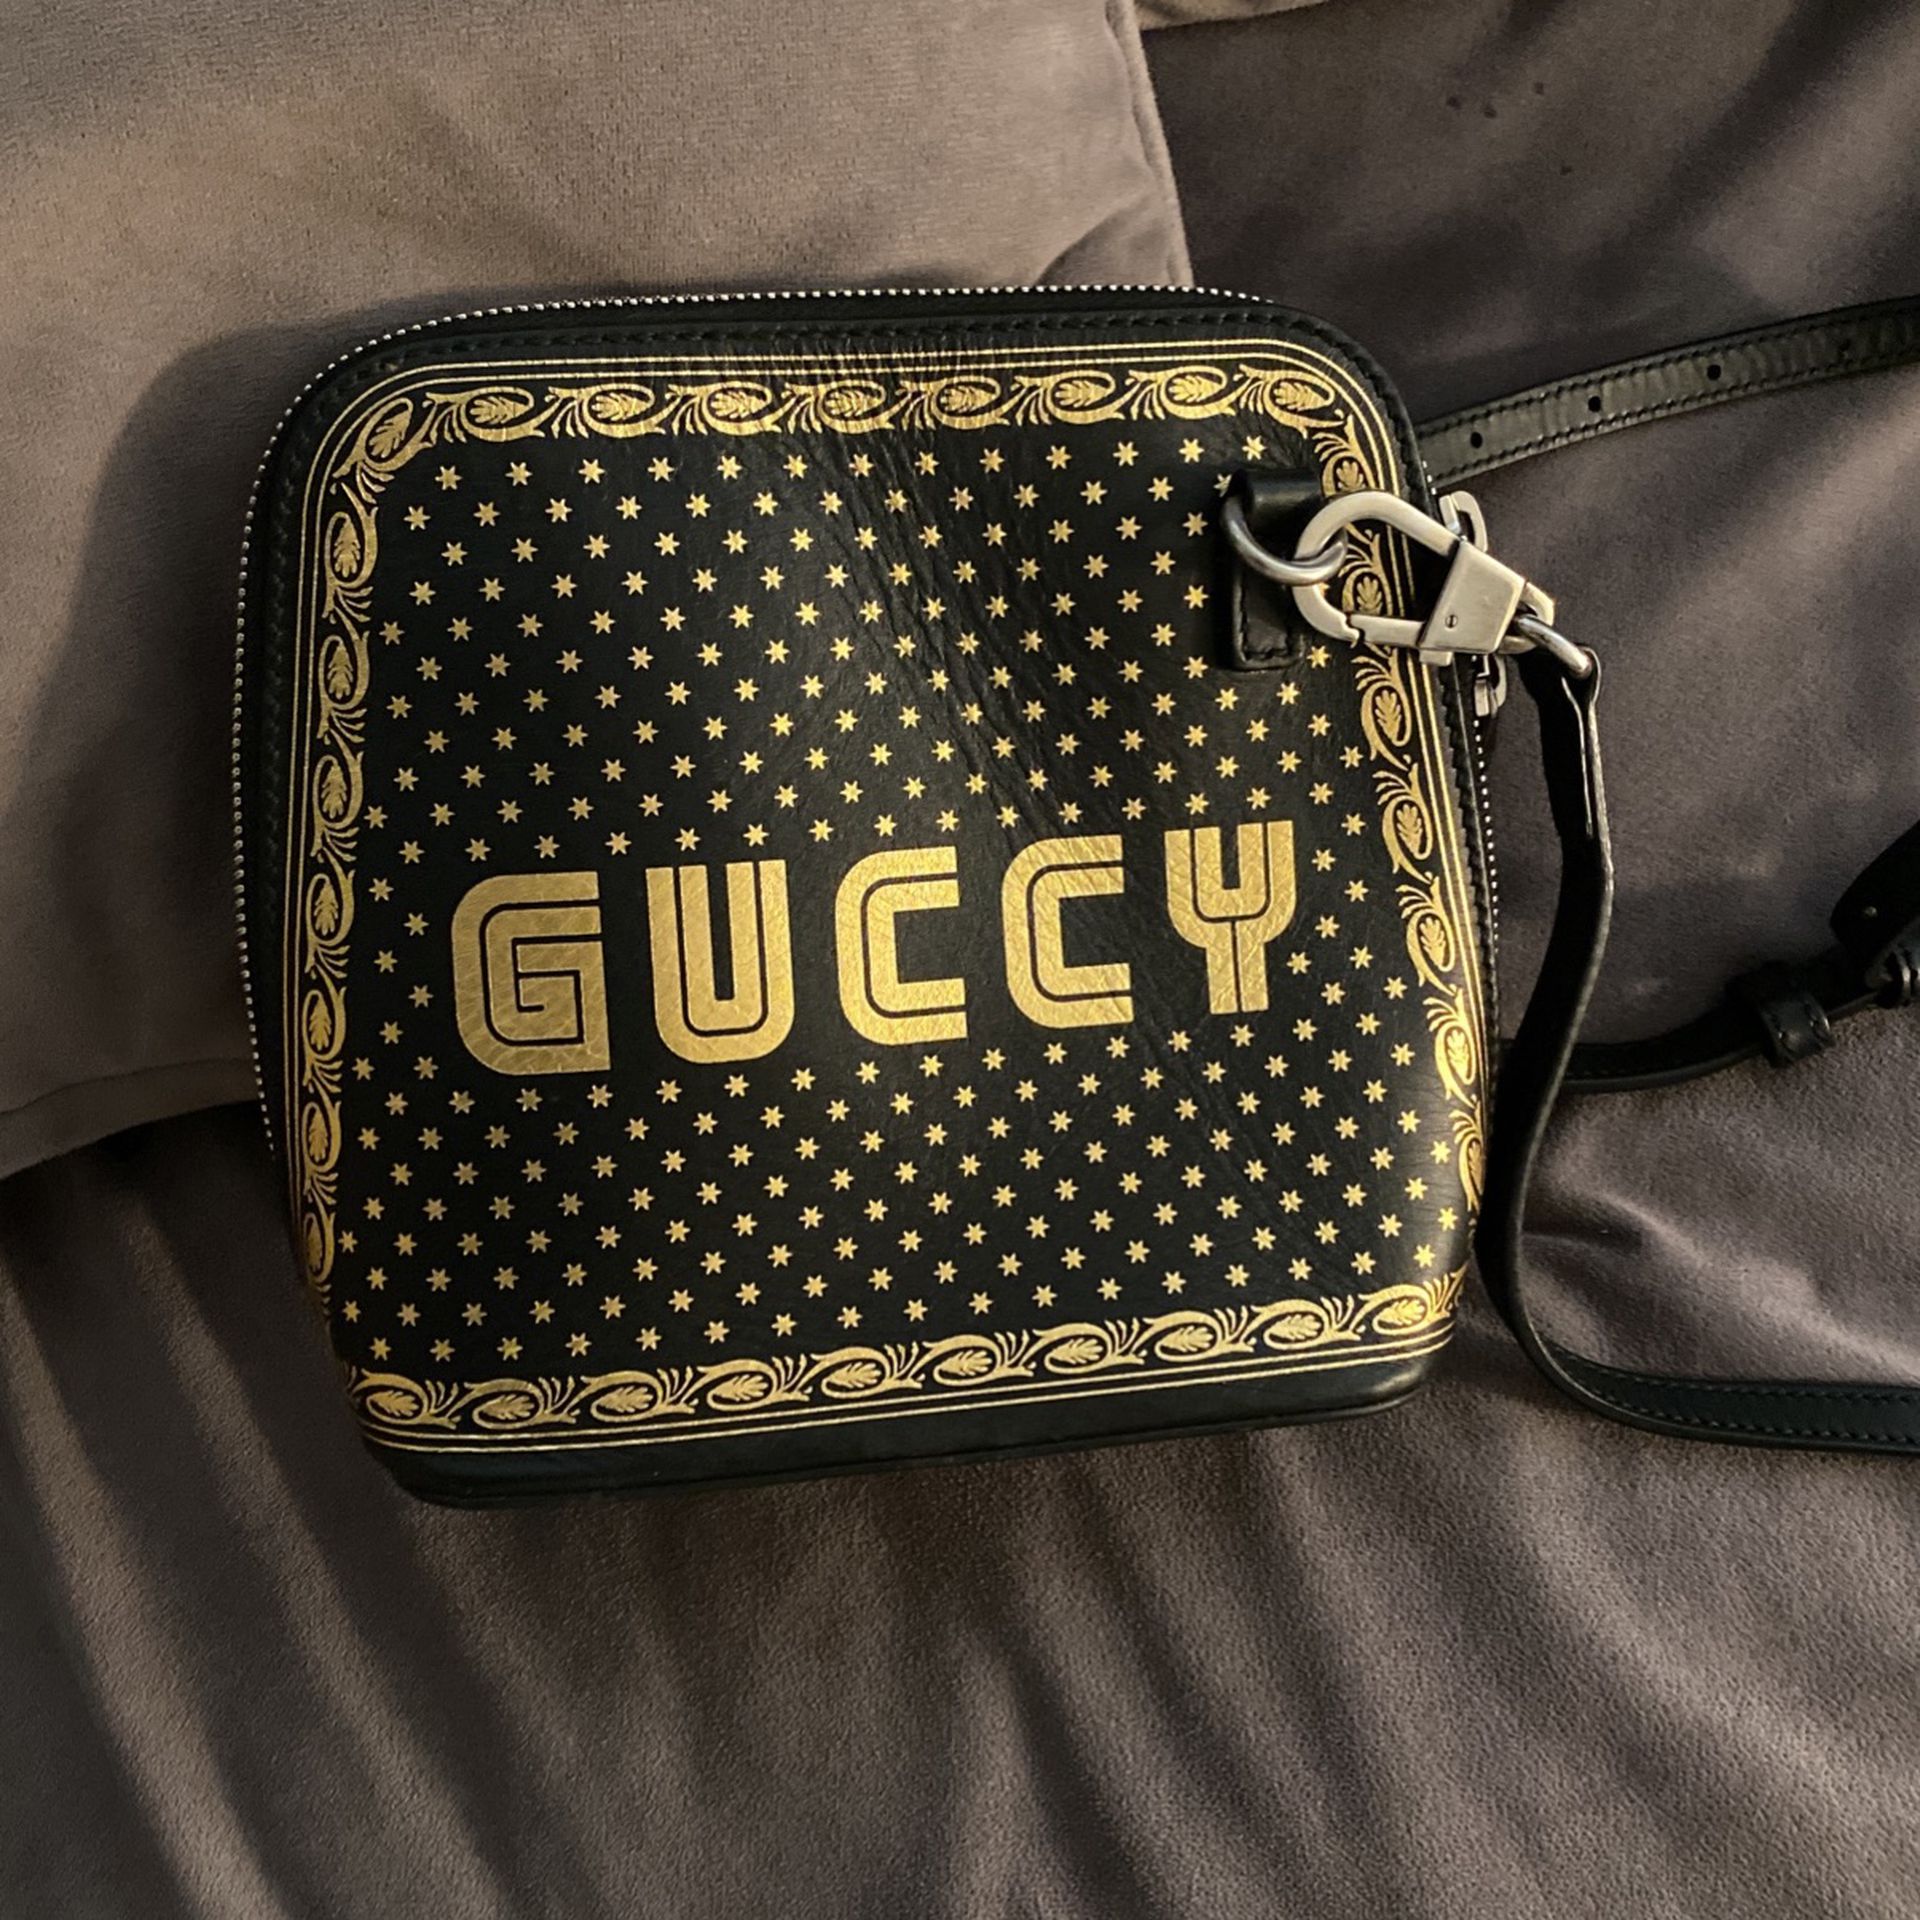 Authentic Gucci Purse Special Edition